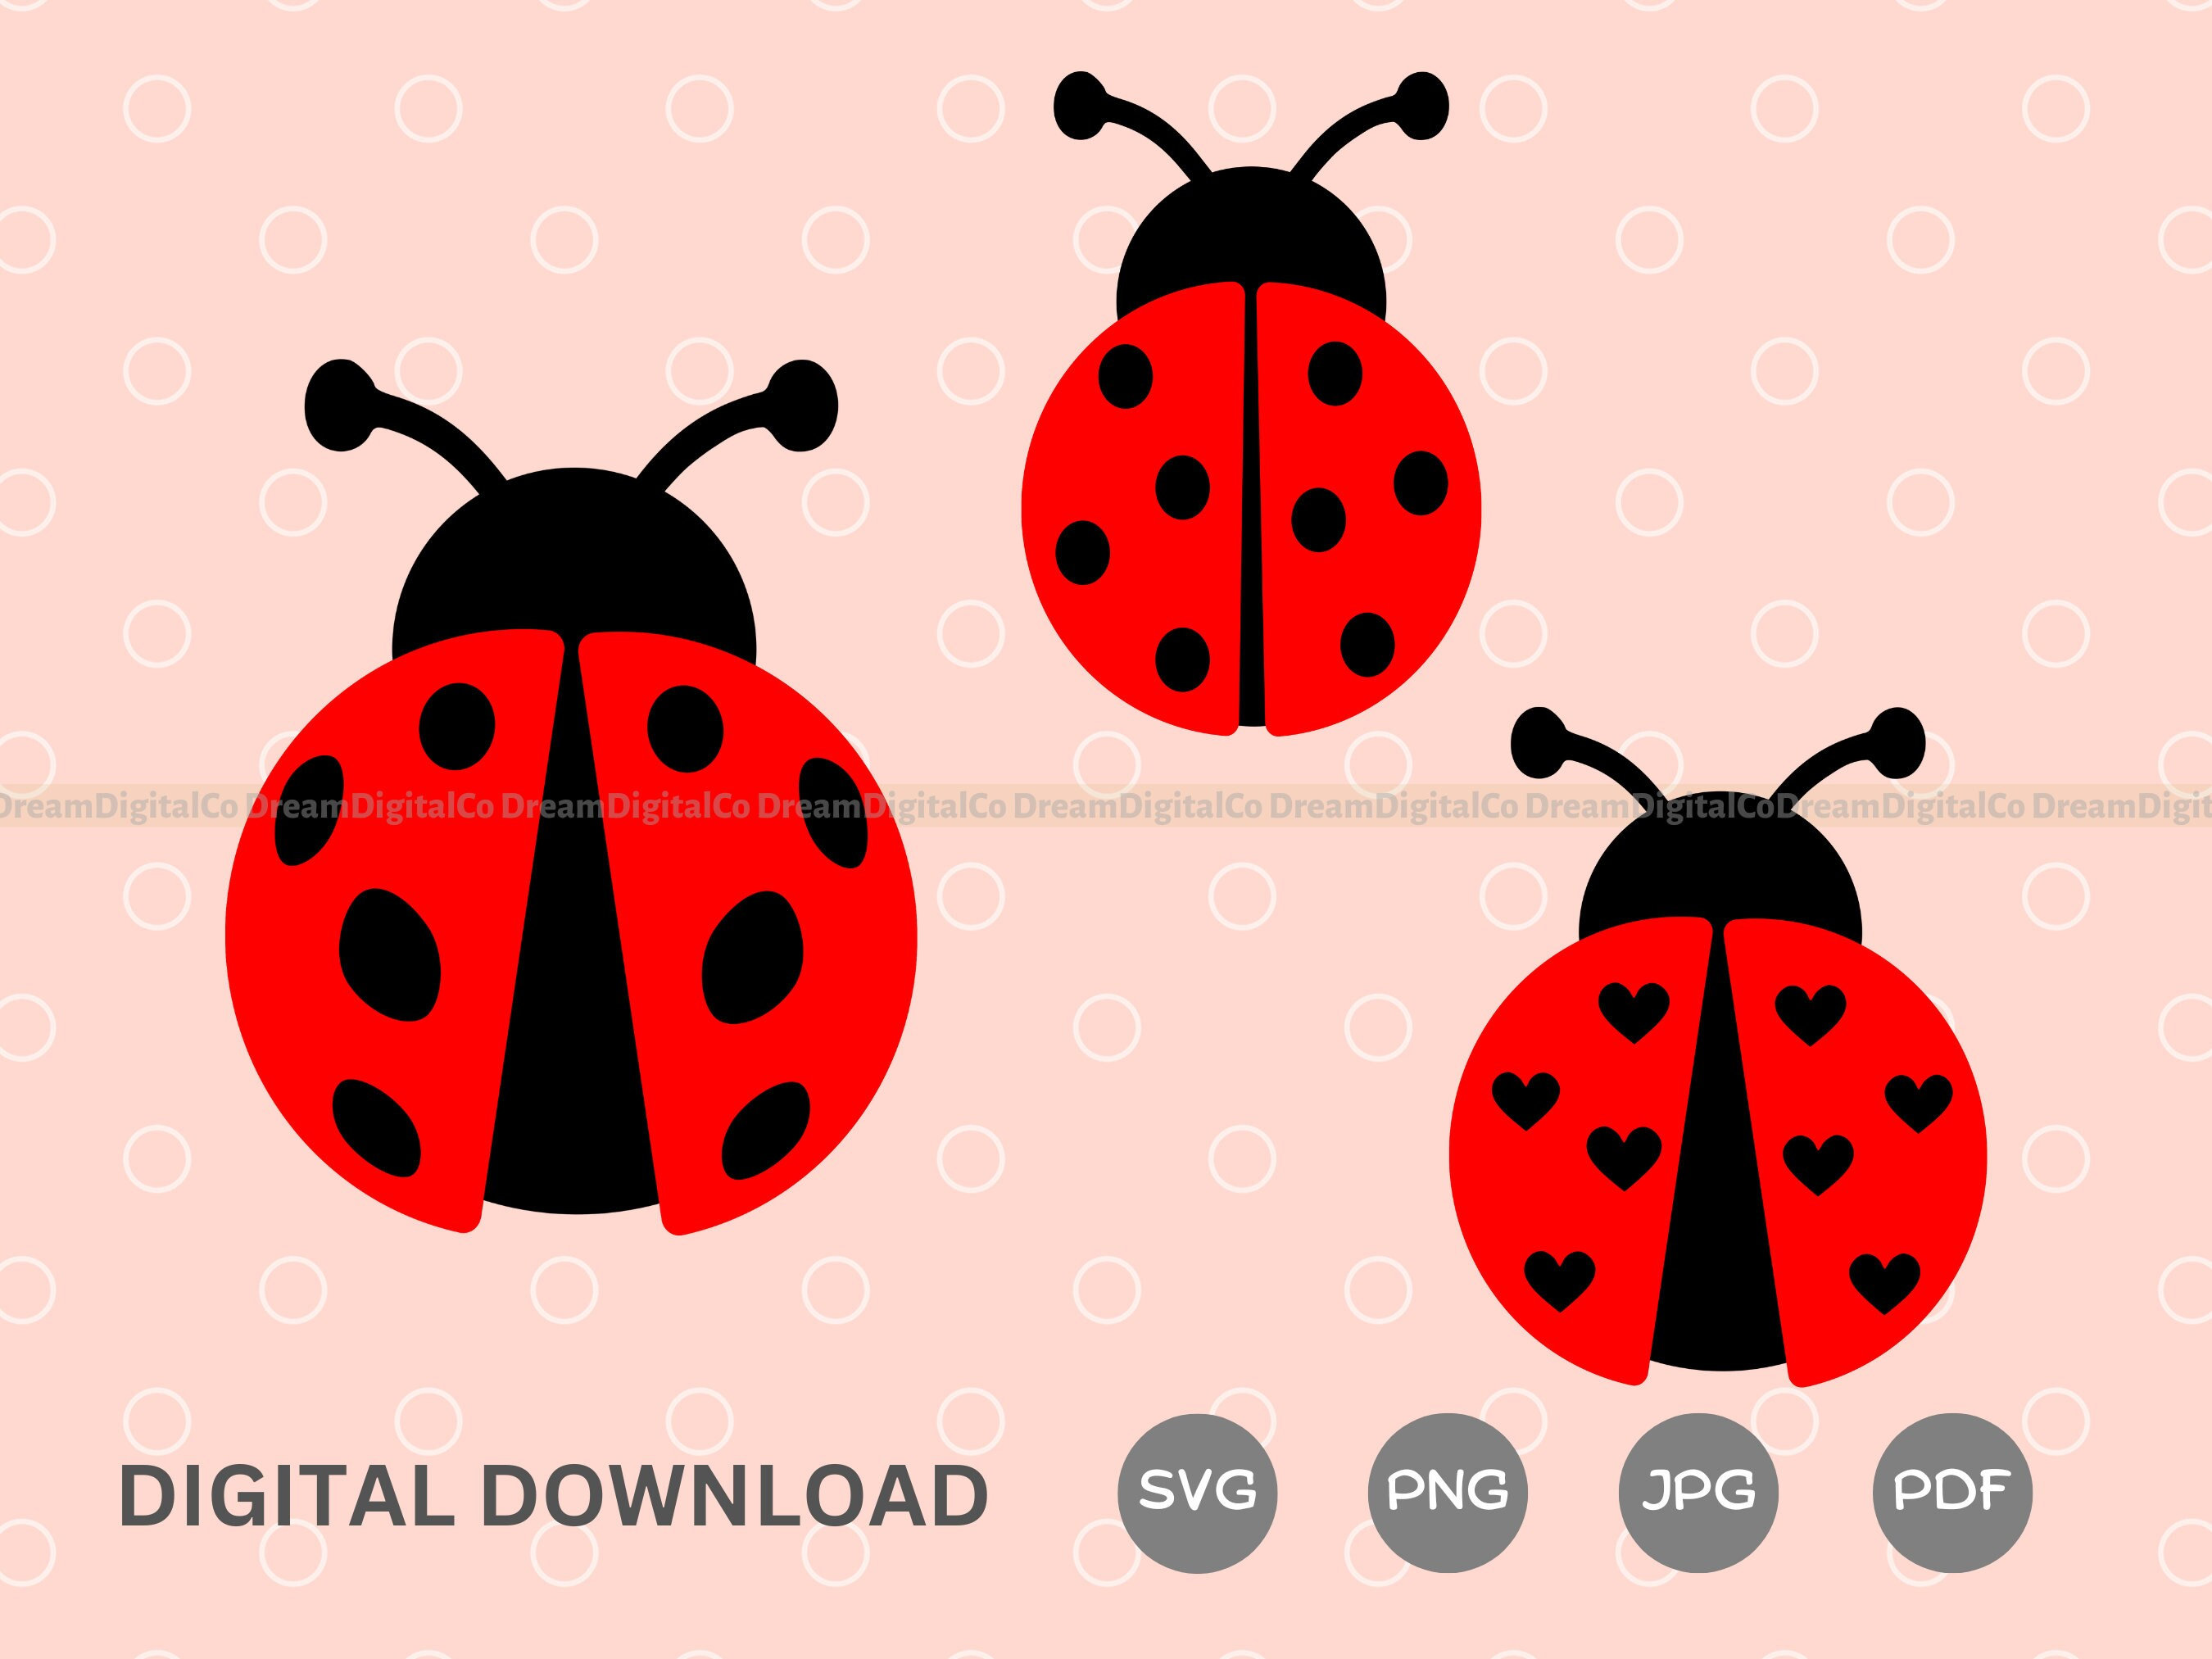 Miraculous Ladybug SVG files for Cricut / Silhouette, Clipart